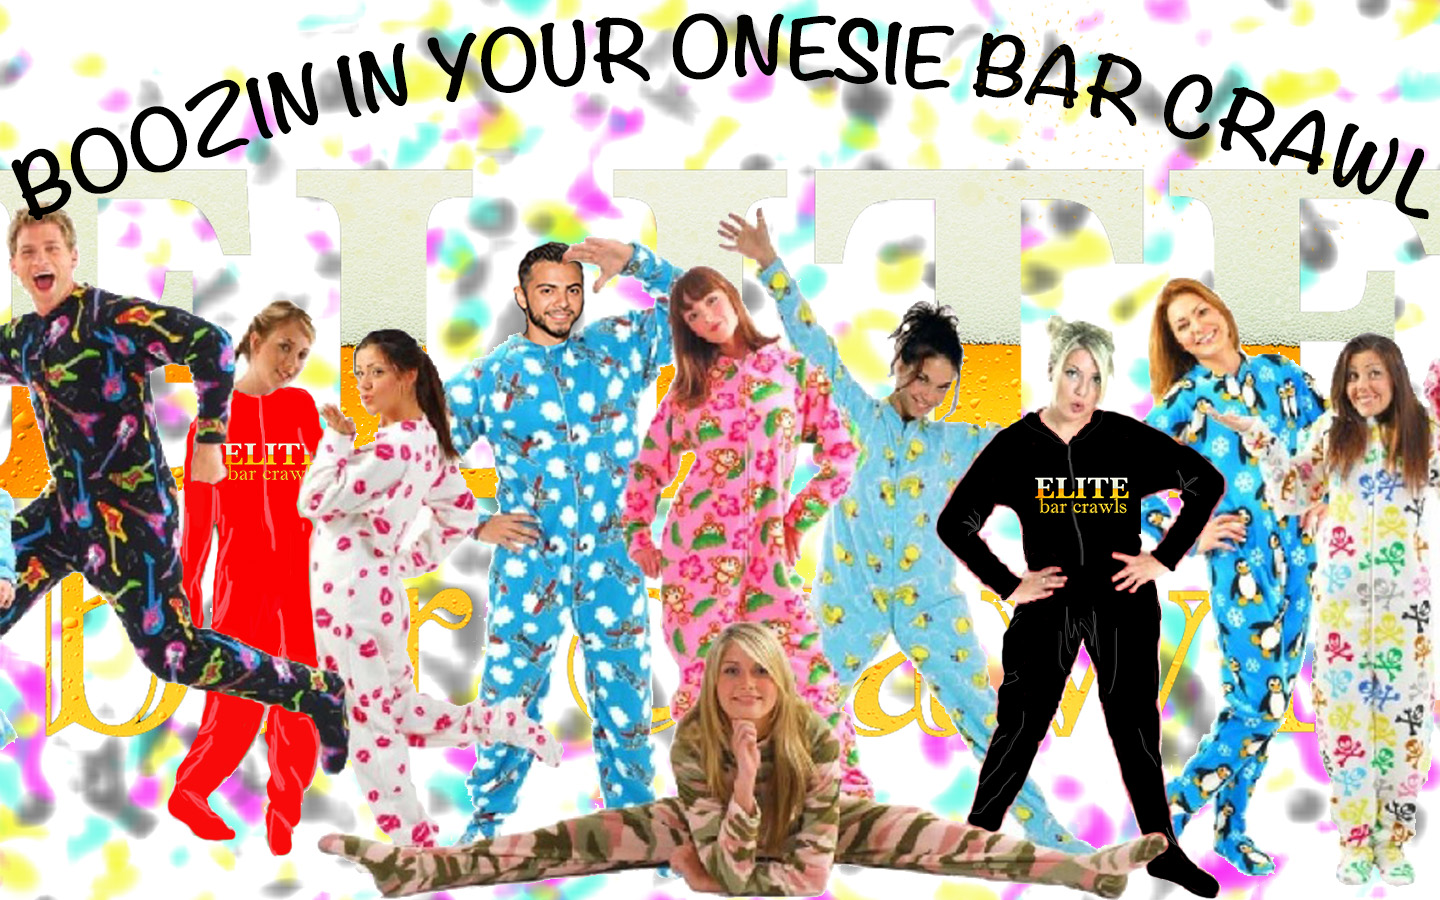 Boozin in your Onesie Bar Crawl Cover Photo